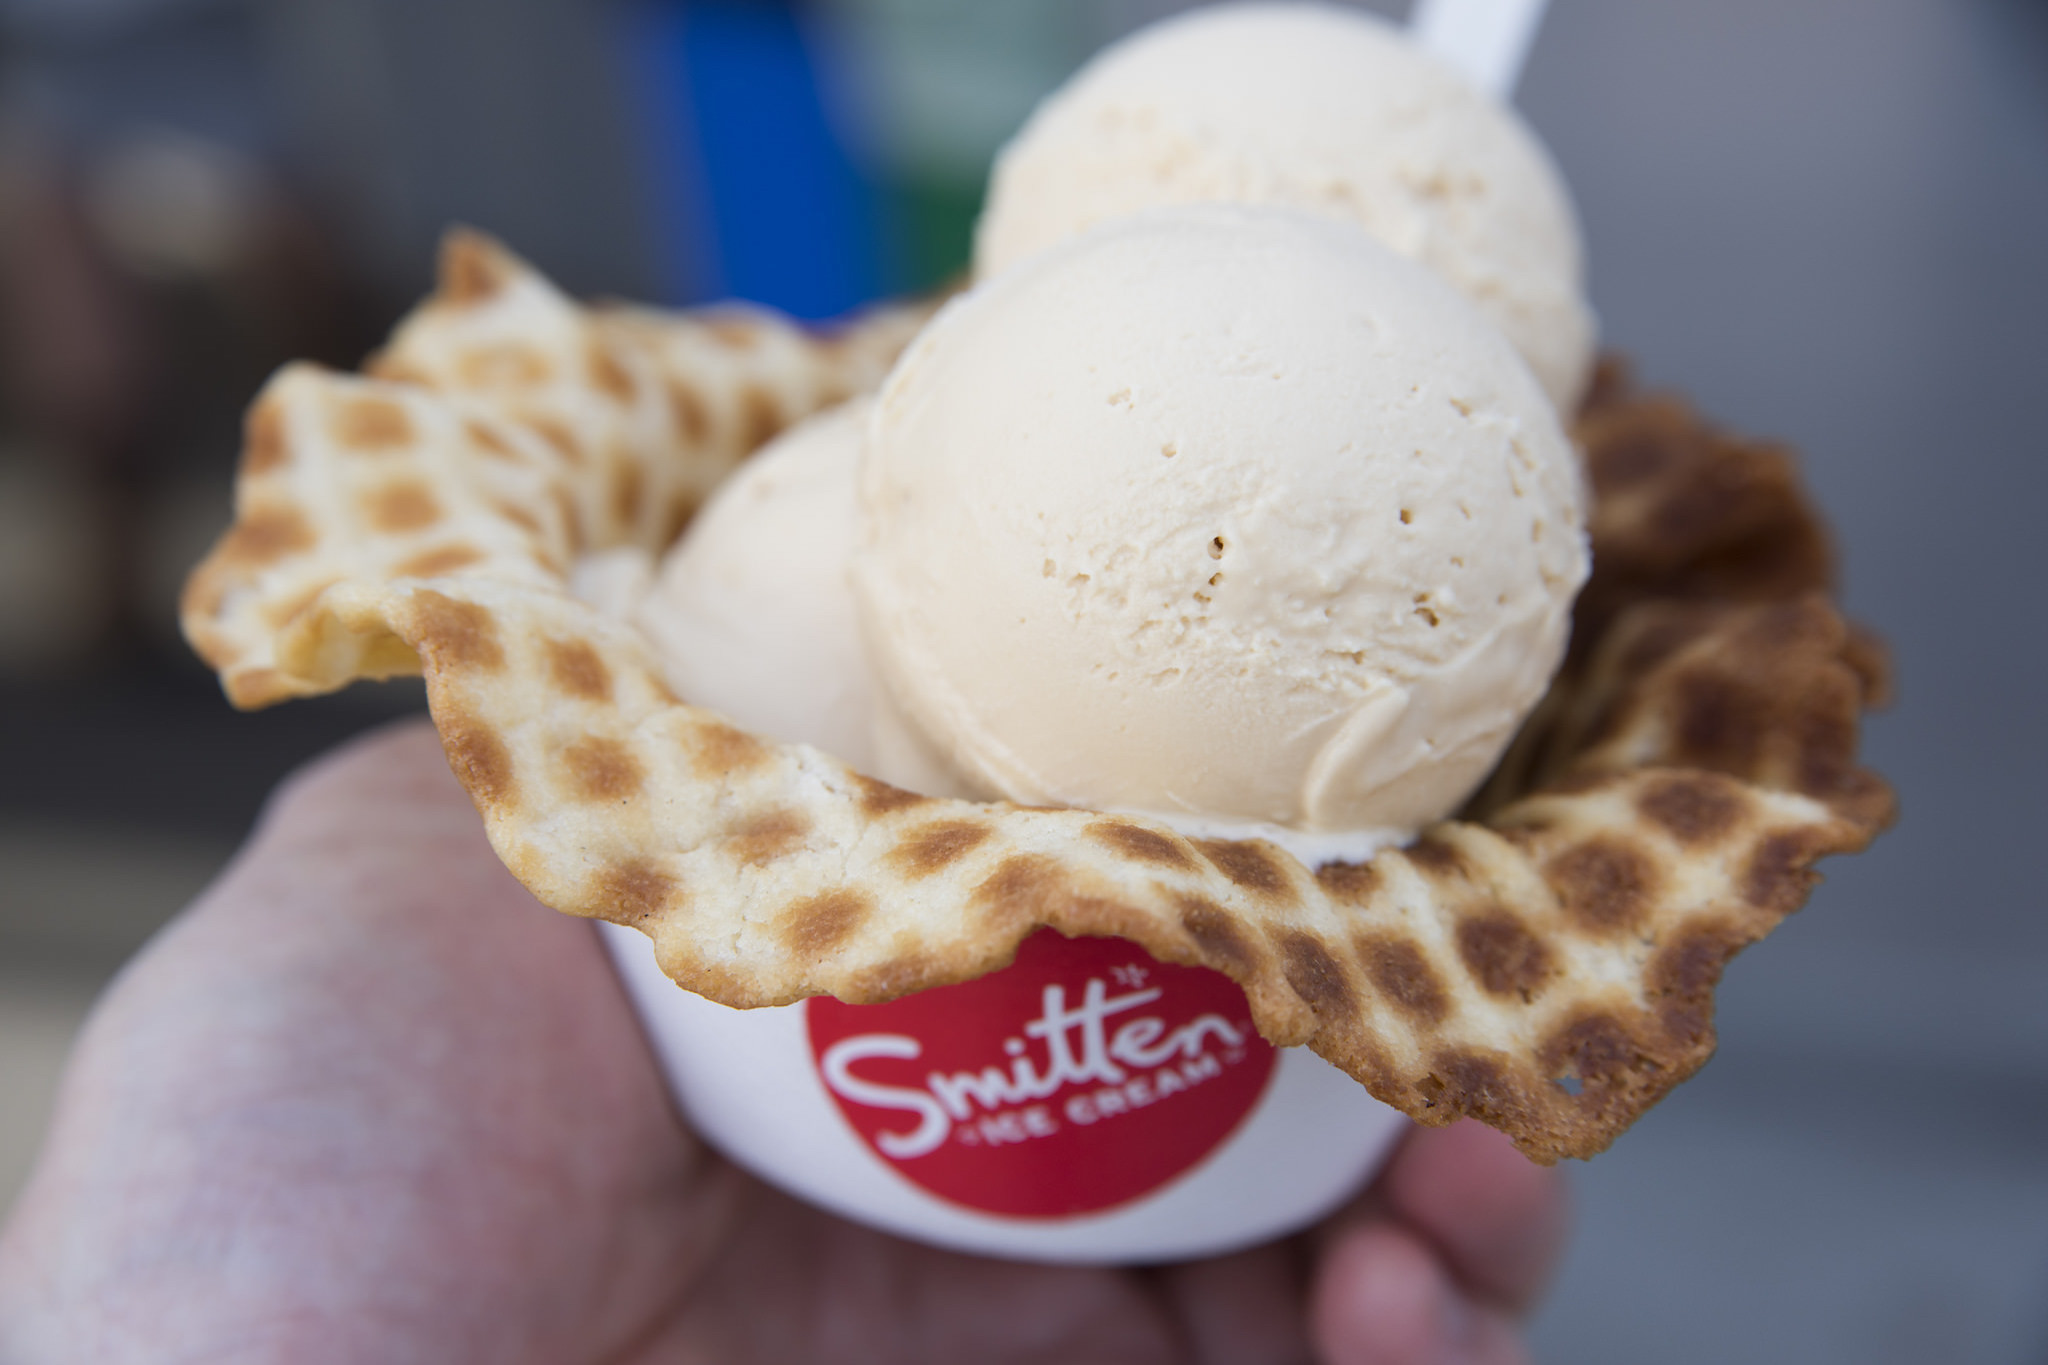 Smitten Ice Cream | Restaurants in Hayes Valley, San Francisco